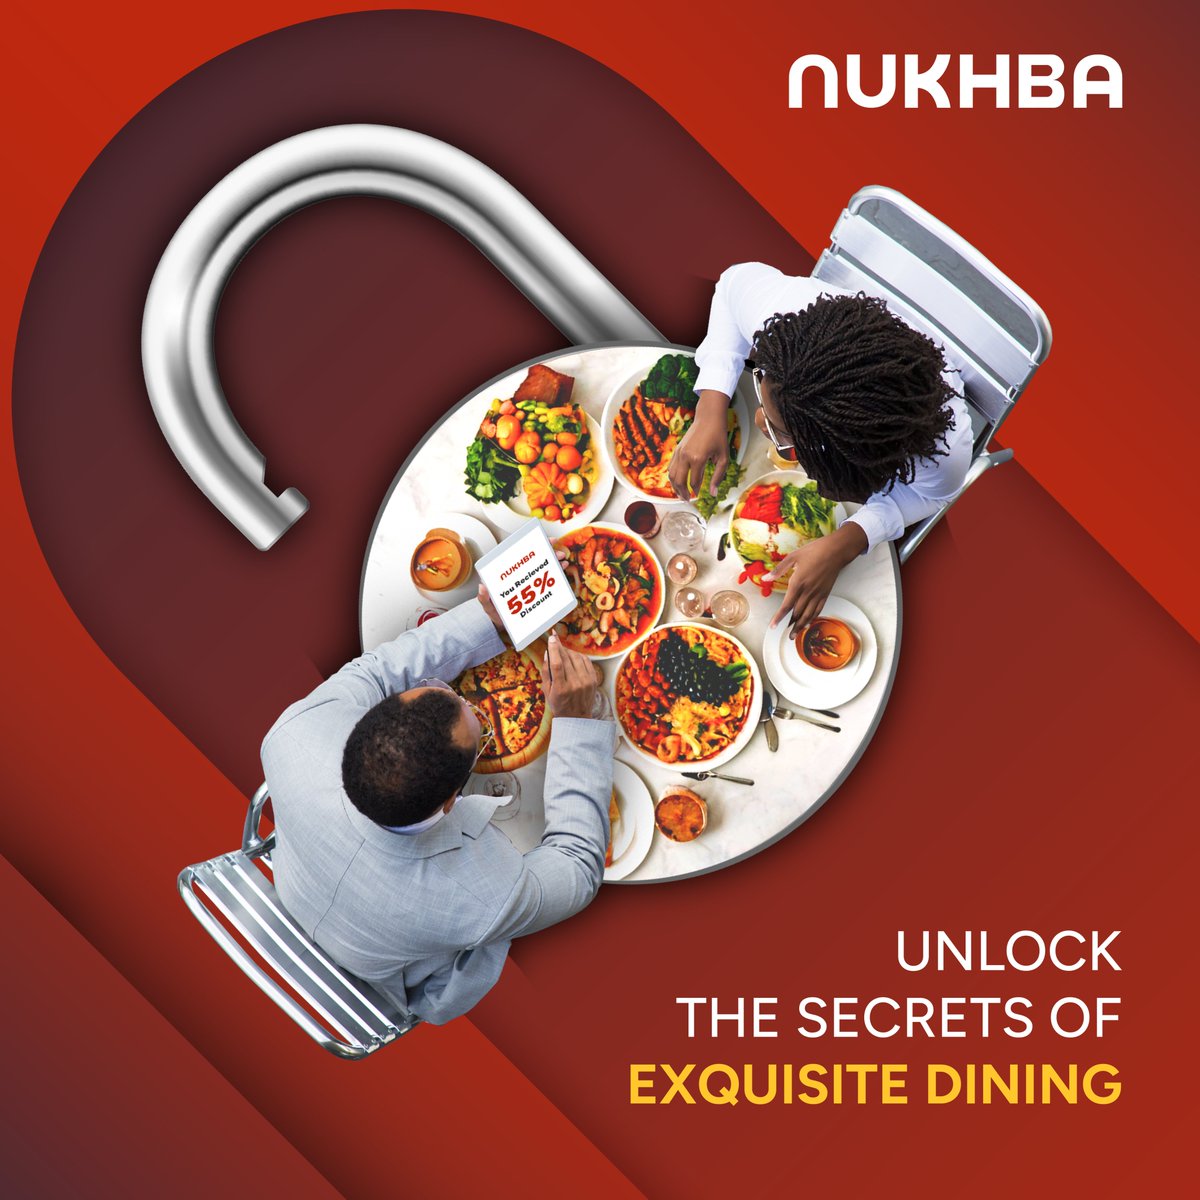 Unlock the door to unforgettable dining experiences with Nukhba and discover the true meaning of culinary delight! 

#nukhba #nukhbaApp #dubairestaurants #dubaieats #dubaifood #finediningdubai #restaurantsindubai #visitdubai #mydubai #dubaifoodie #foodfindsdubai #uae #dubai